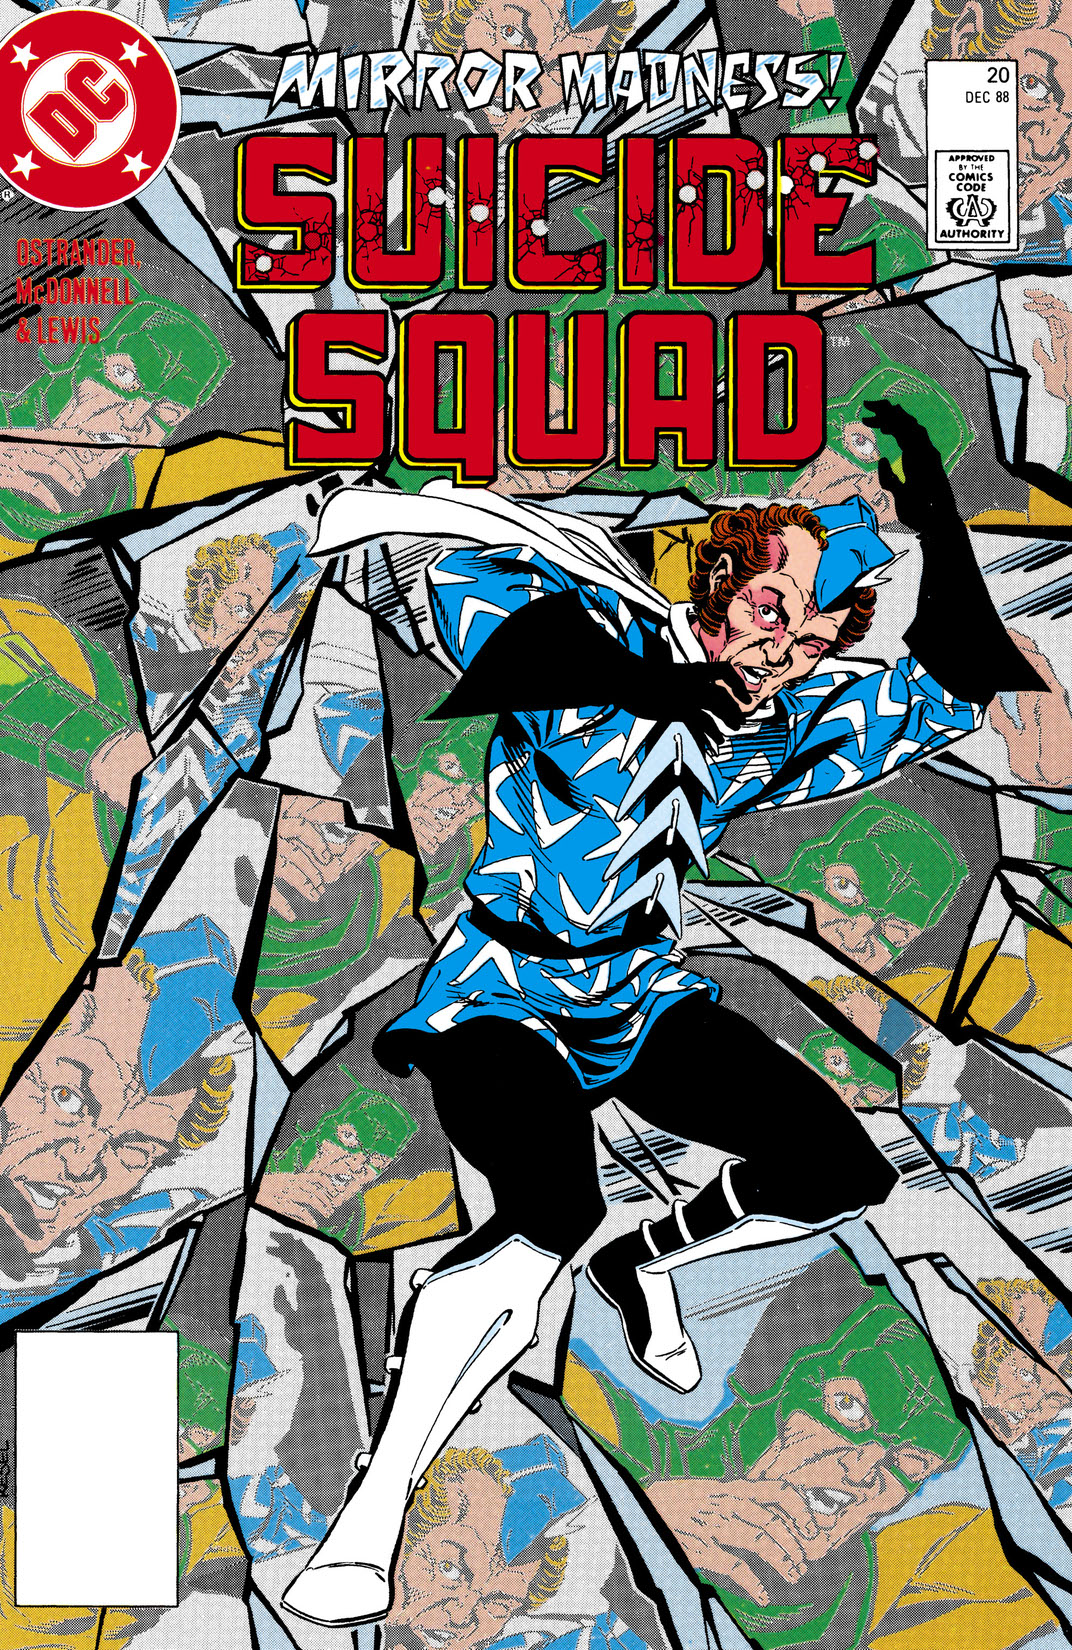 Suicide Squad (1987-) #20 preview images